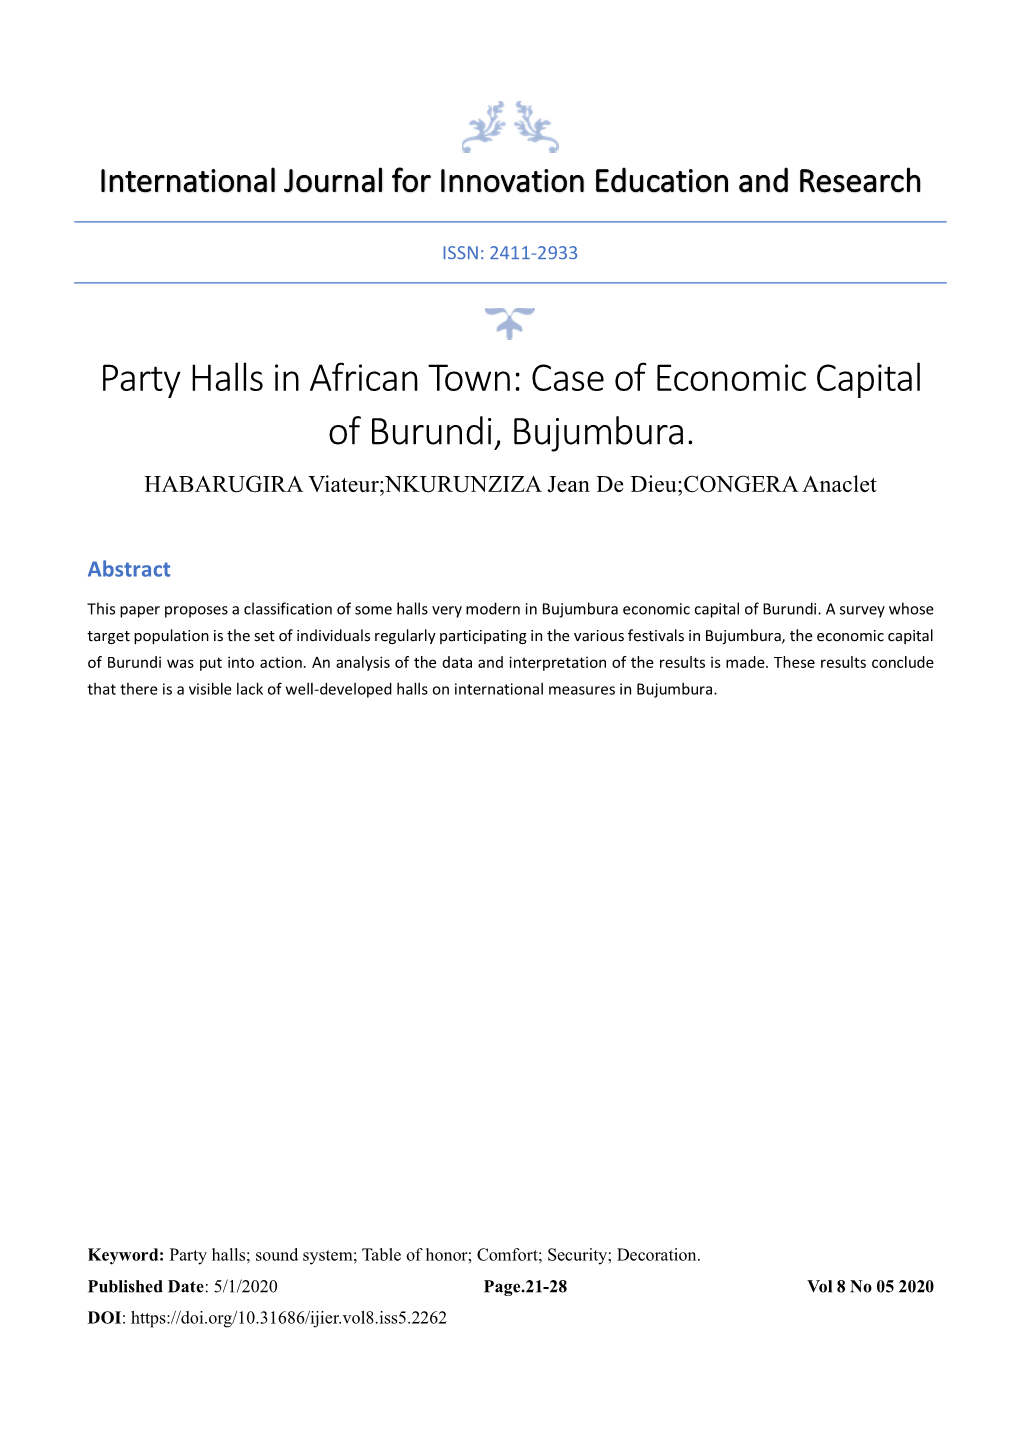 Party Halls in African Town: Case of Economic Capital of Burundi, Bujumbura